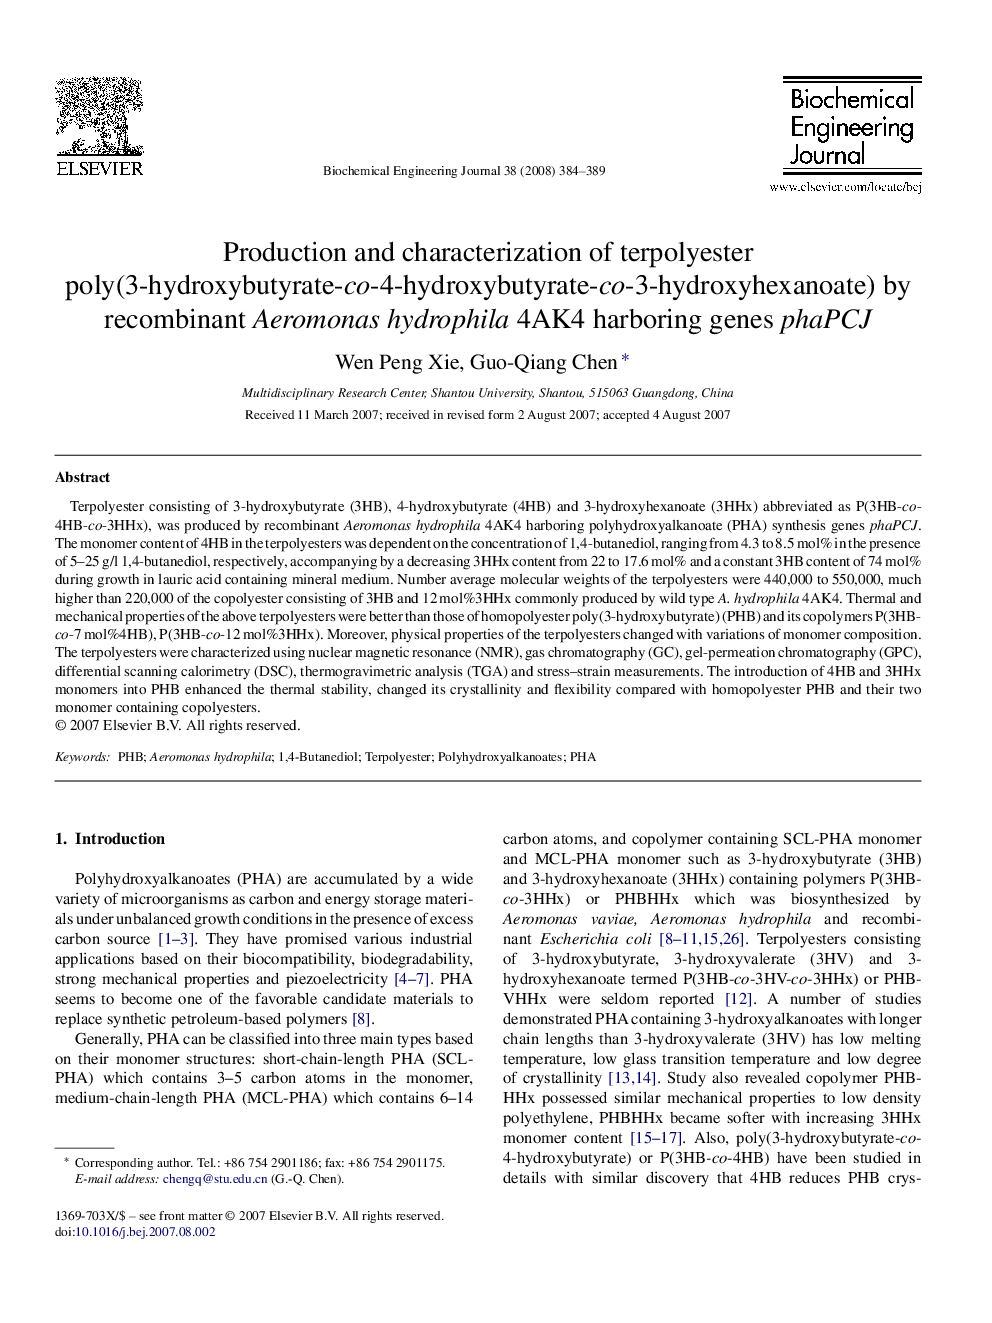 Production and characterization of terpolyester poly(3-hydroxybutyrate-co-4-hydroxybutyrate-co-3-hydroxyhexanoate) by recombinant Aeromonas hydrophila 4AK4 harboring genes phaPCJ